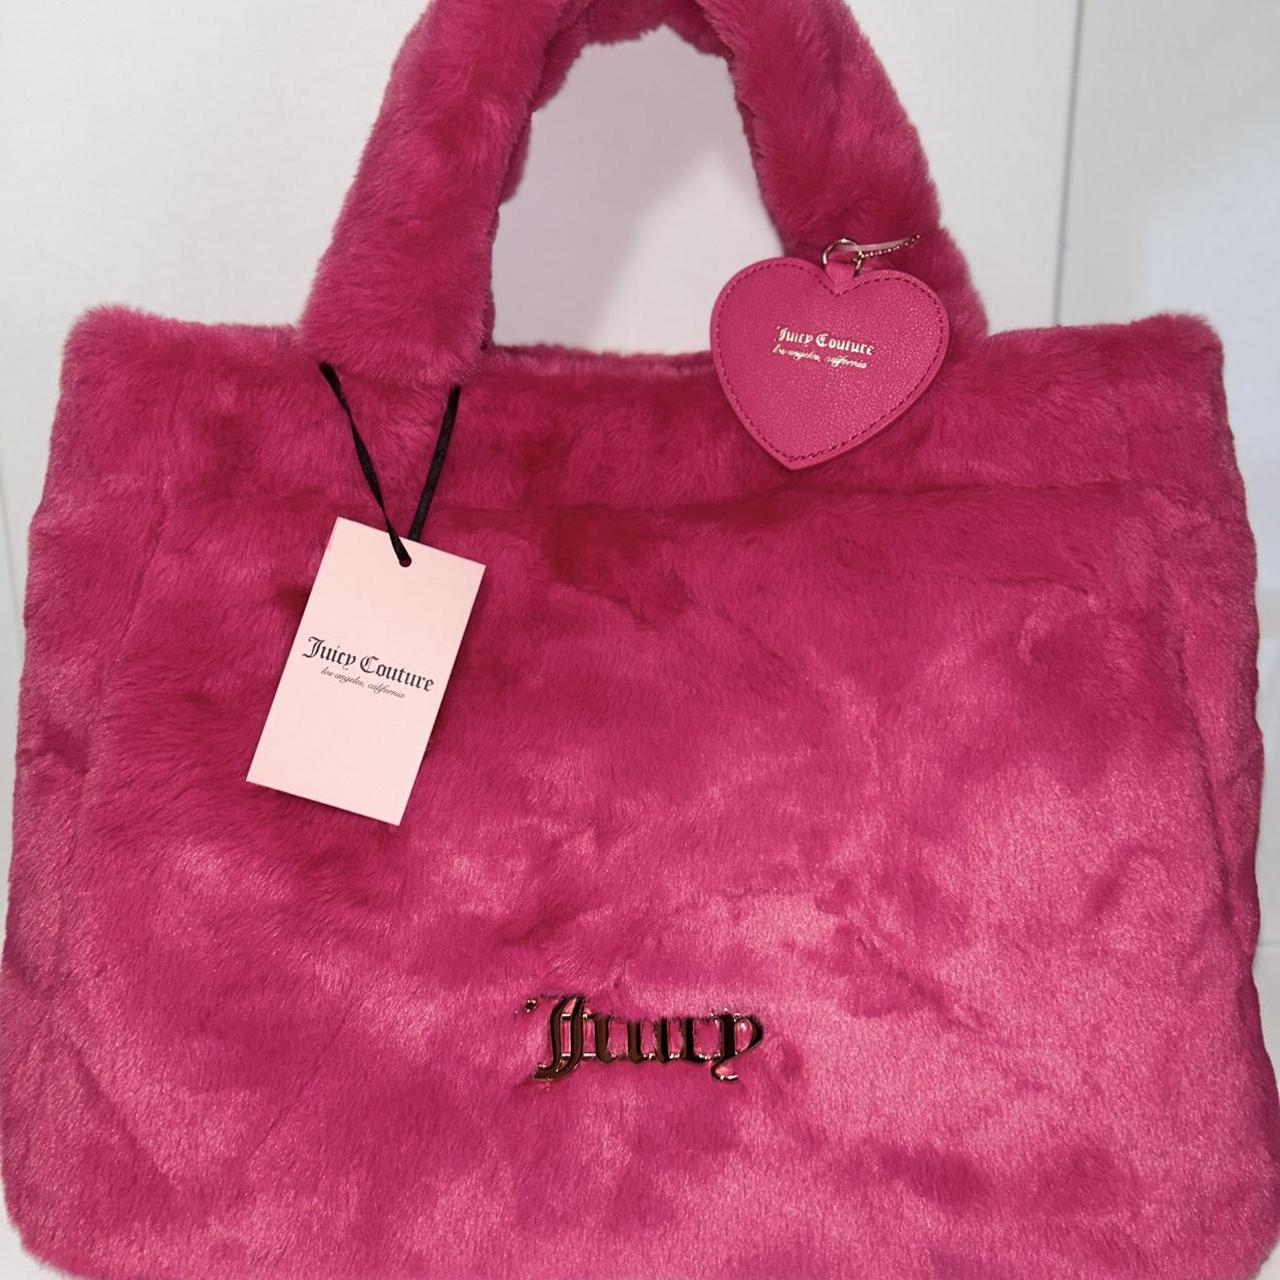 Women Tote Bag Tassels Leather Shoulder Handbags Fashion Ladies Purses  Satchel Messenger Bags - Hot Pink - Walmart.com